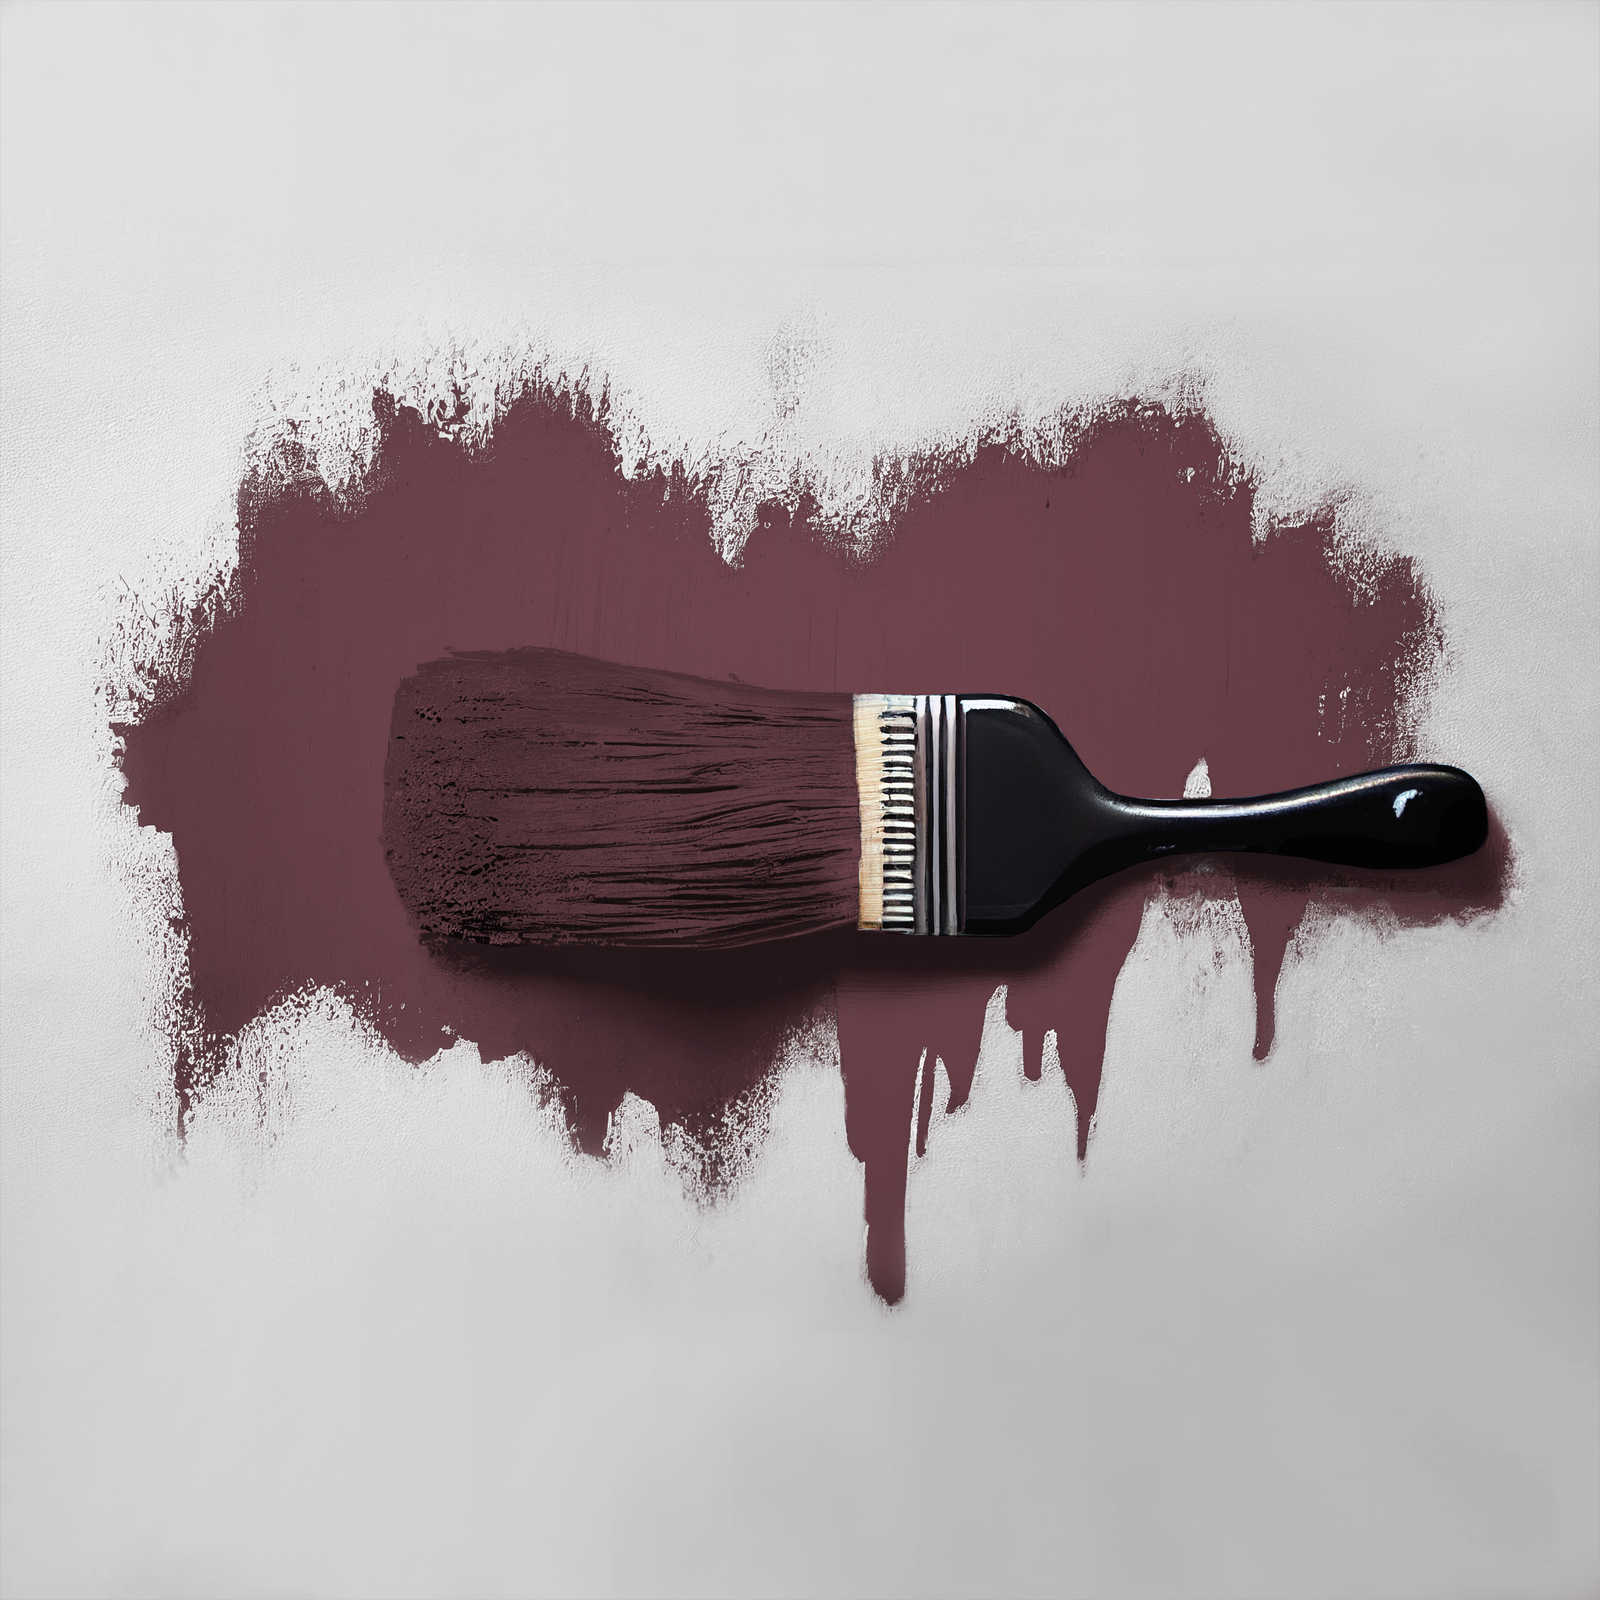             Wall Paint TCK7013 »Red Wine« in an intense bordeaux – 2.5 litre
        